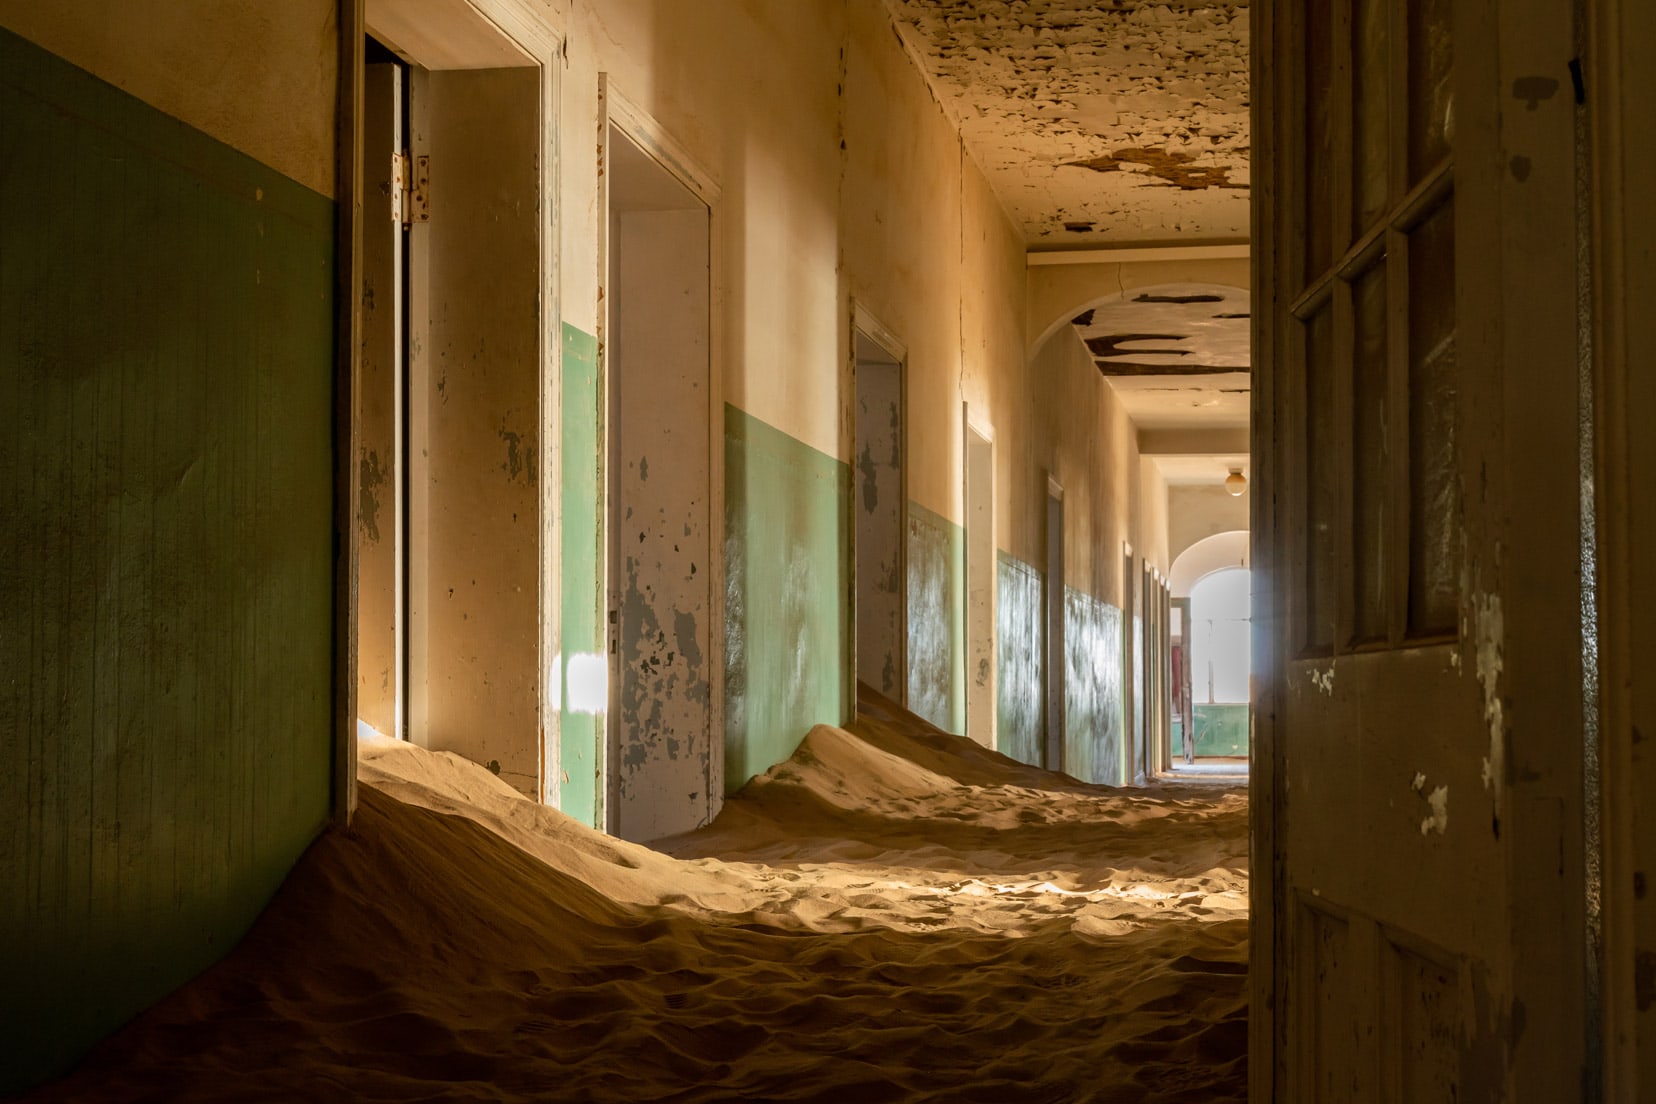 Kolmanskop - a corridor with sand mounting on one side